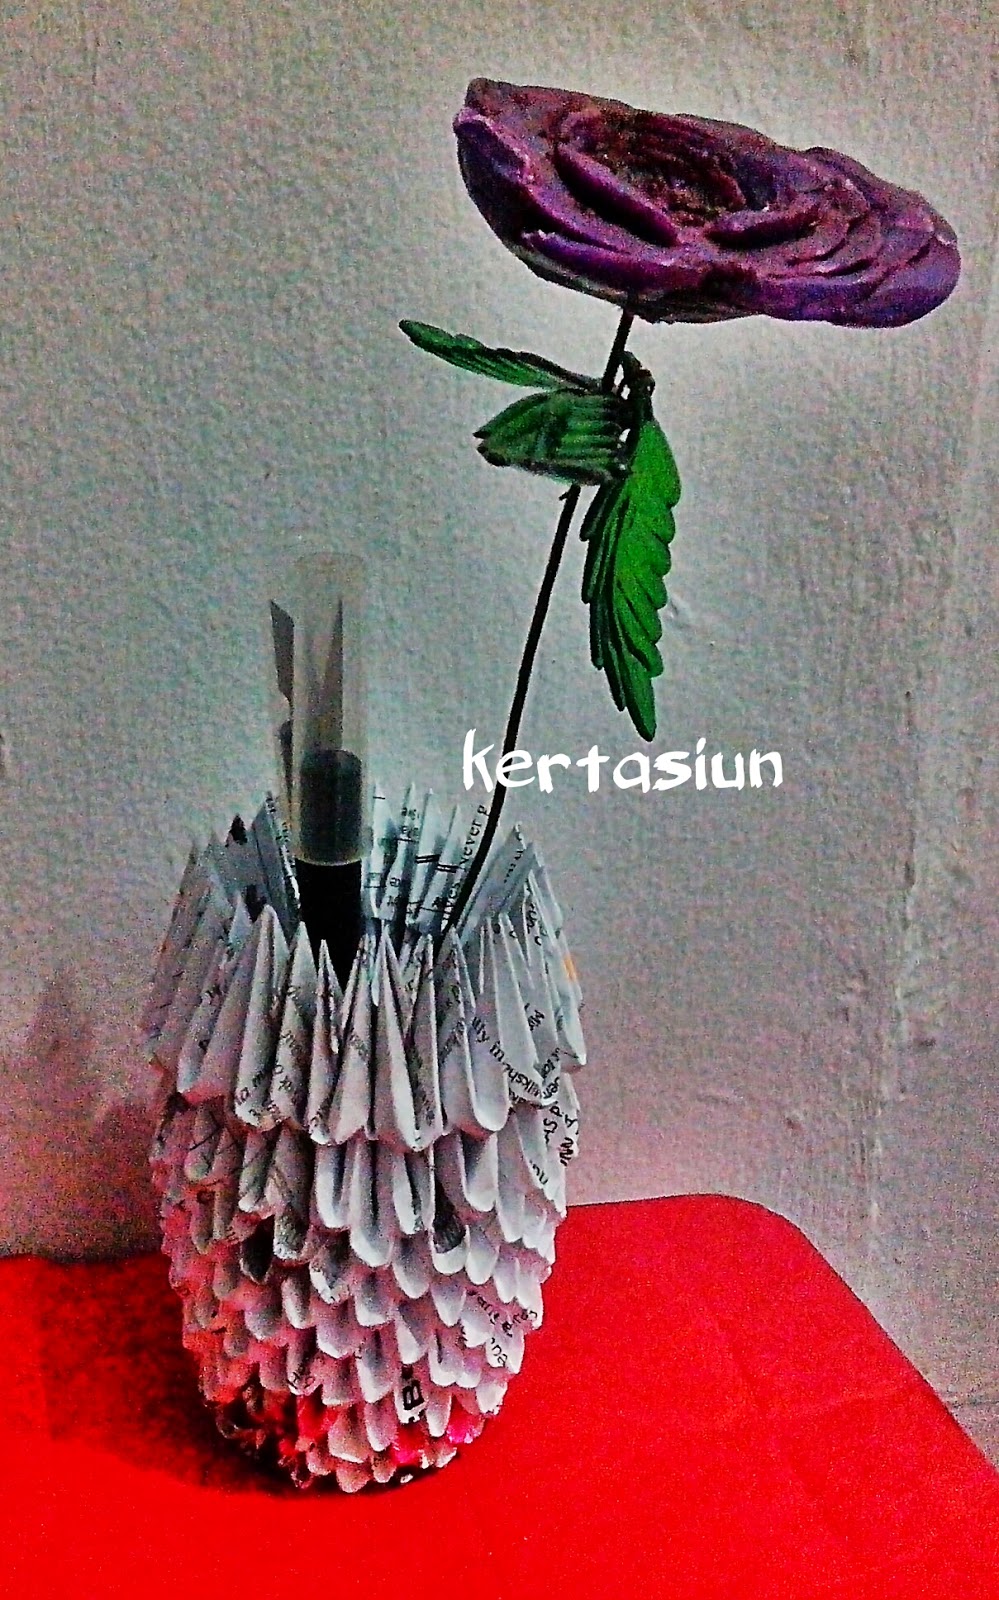 tutorial membuat  origami  vas  bunga 